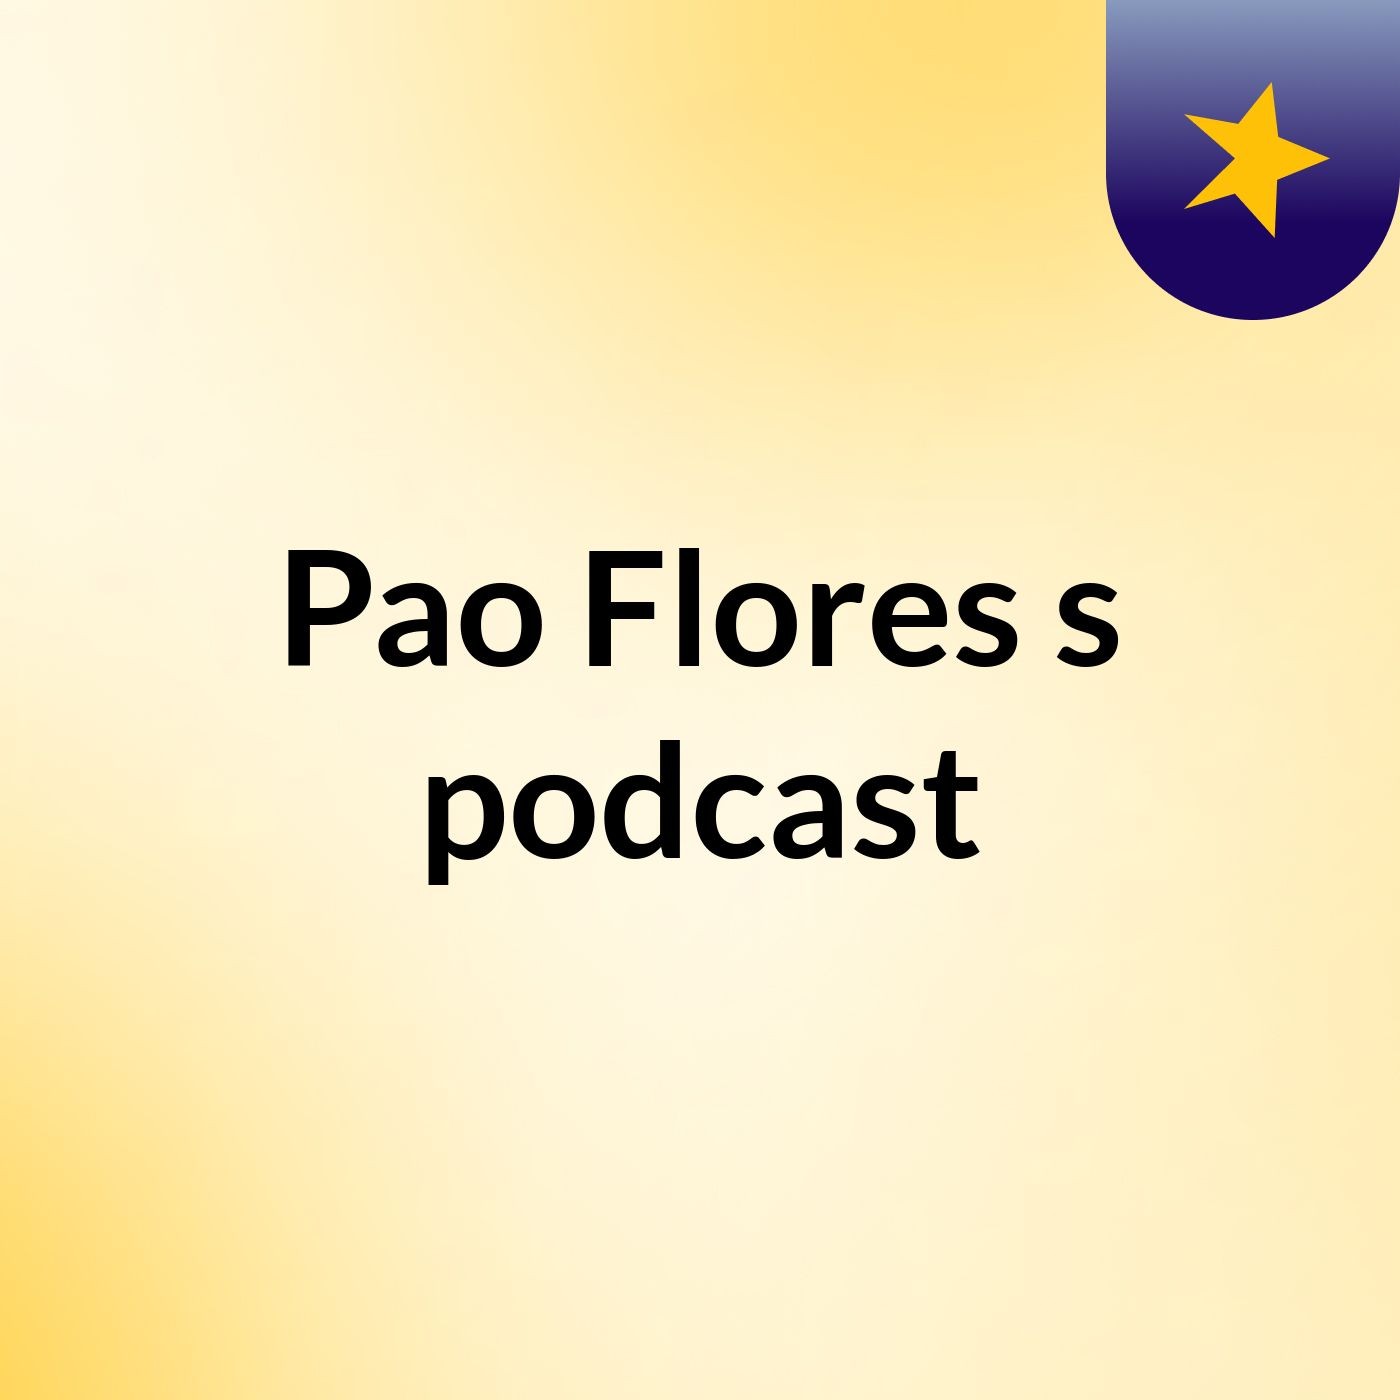 Pao Flores's podcast